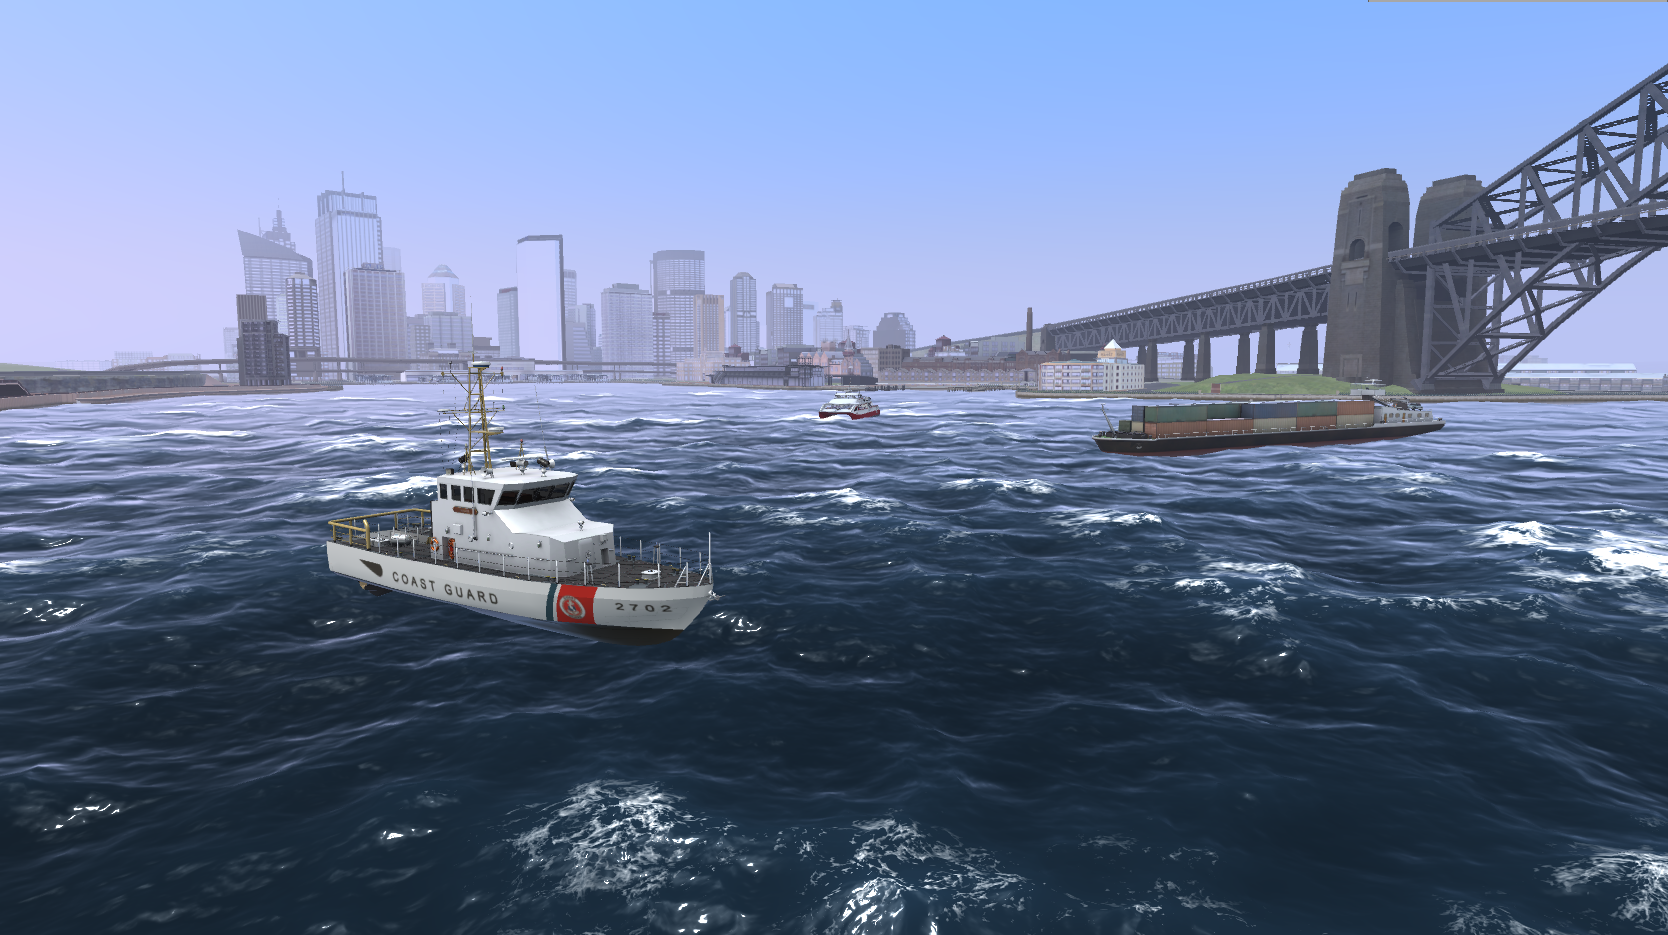 ship simulator extremes demo